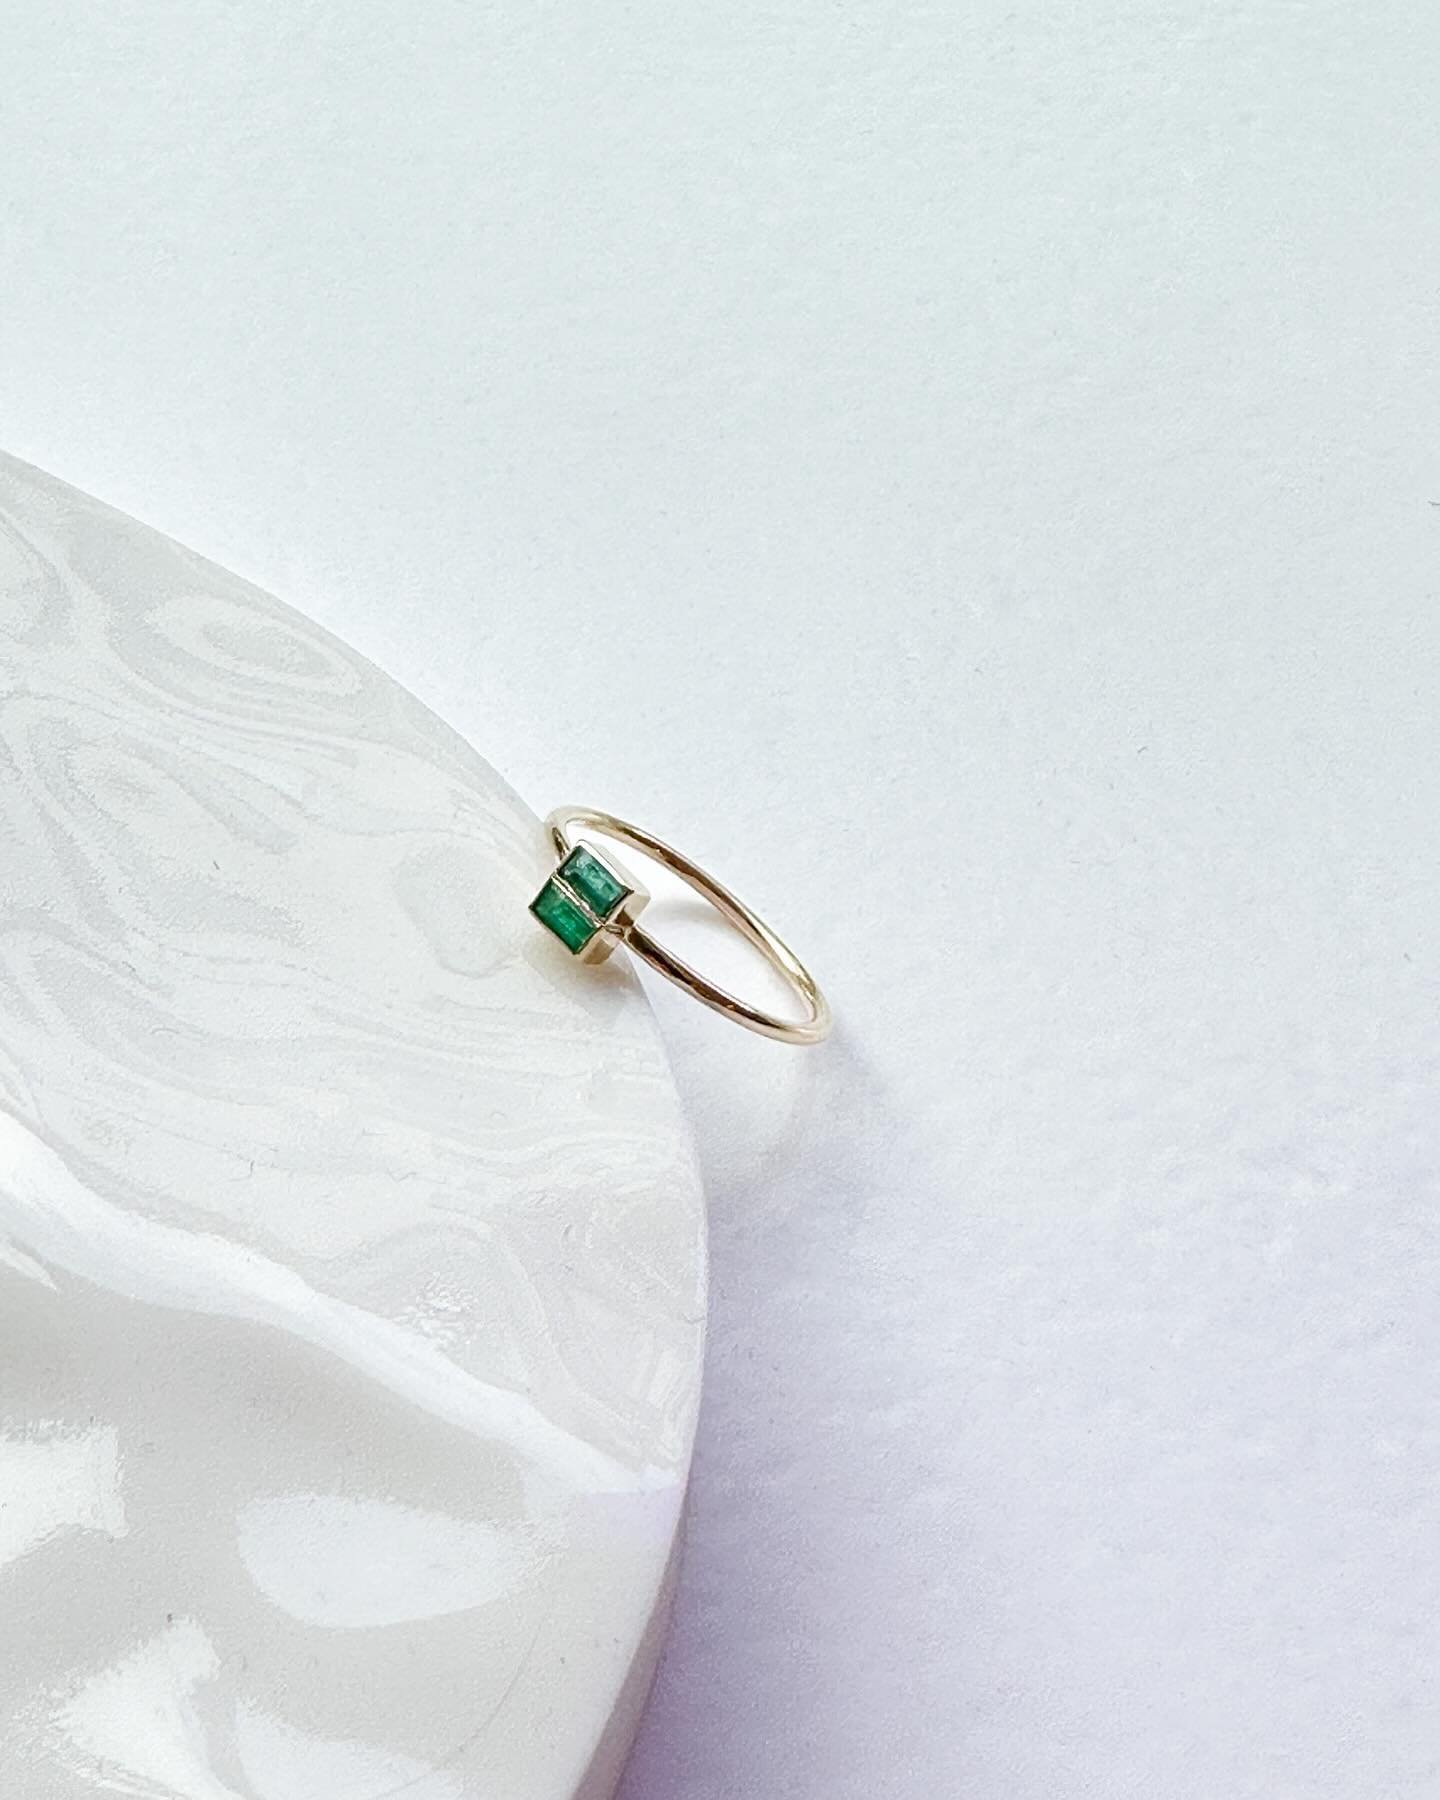 1 + 1 = 1 🐣

#birthring #emeraldring #rectangleemerald #gold
#vanessaaertsjewellery #bespokejewellery #designermaker #jewelrydesigner #jewelryshop